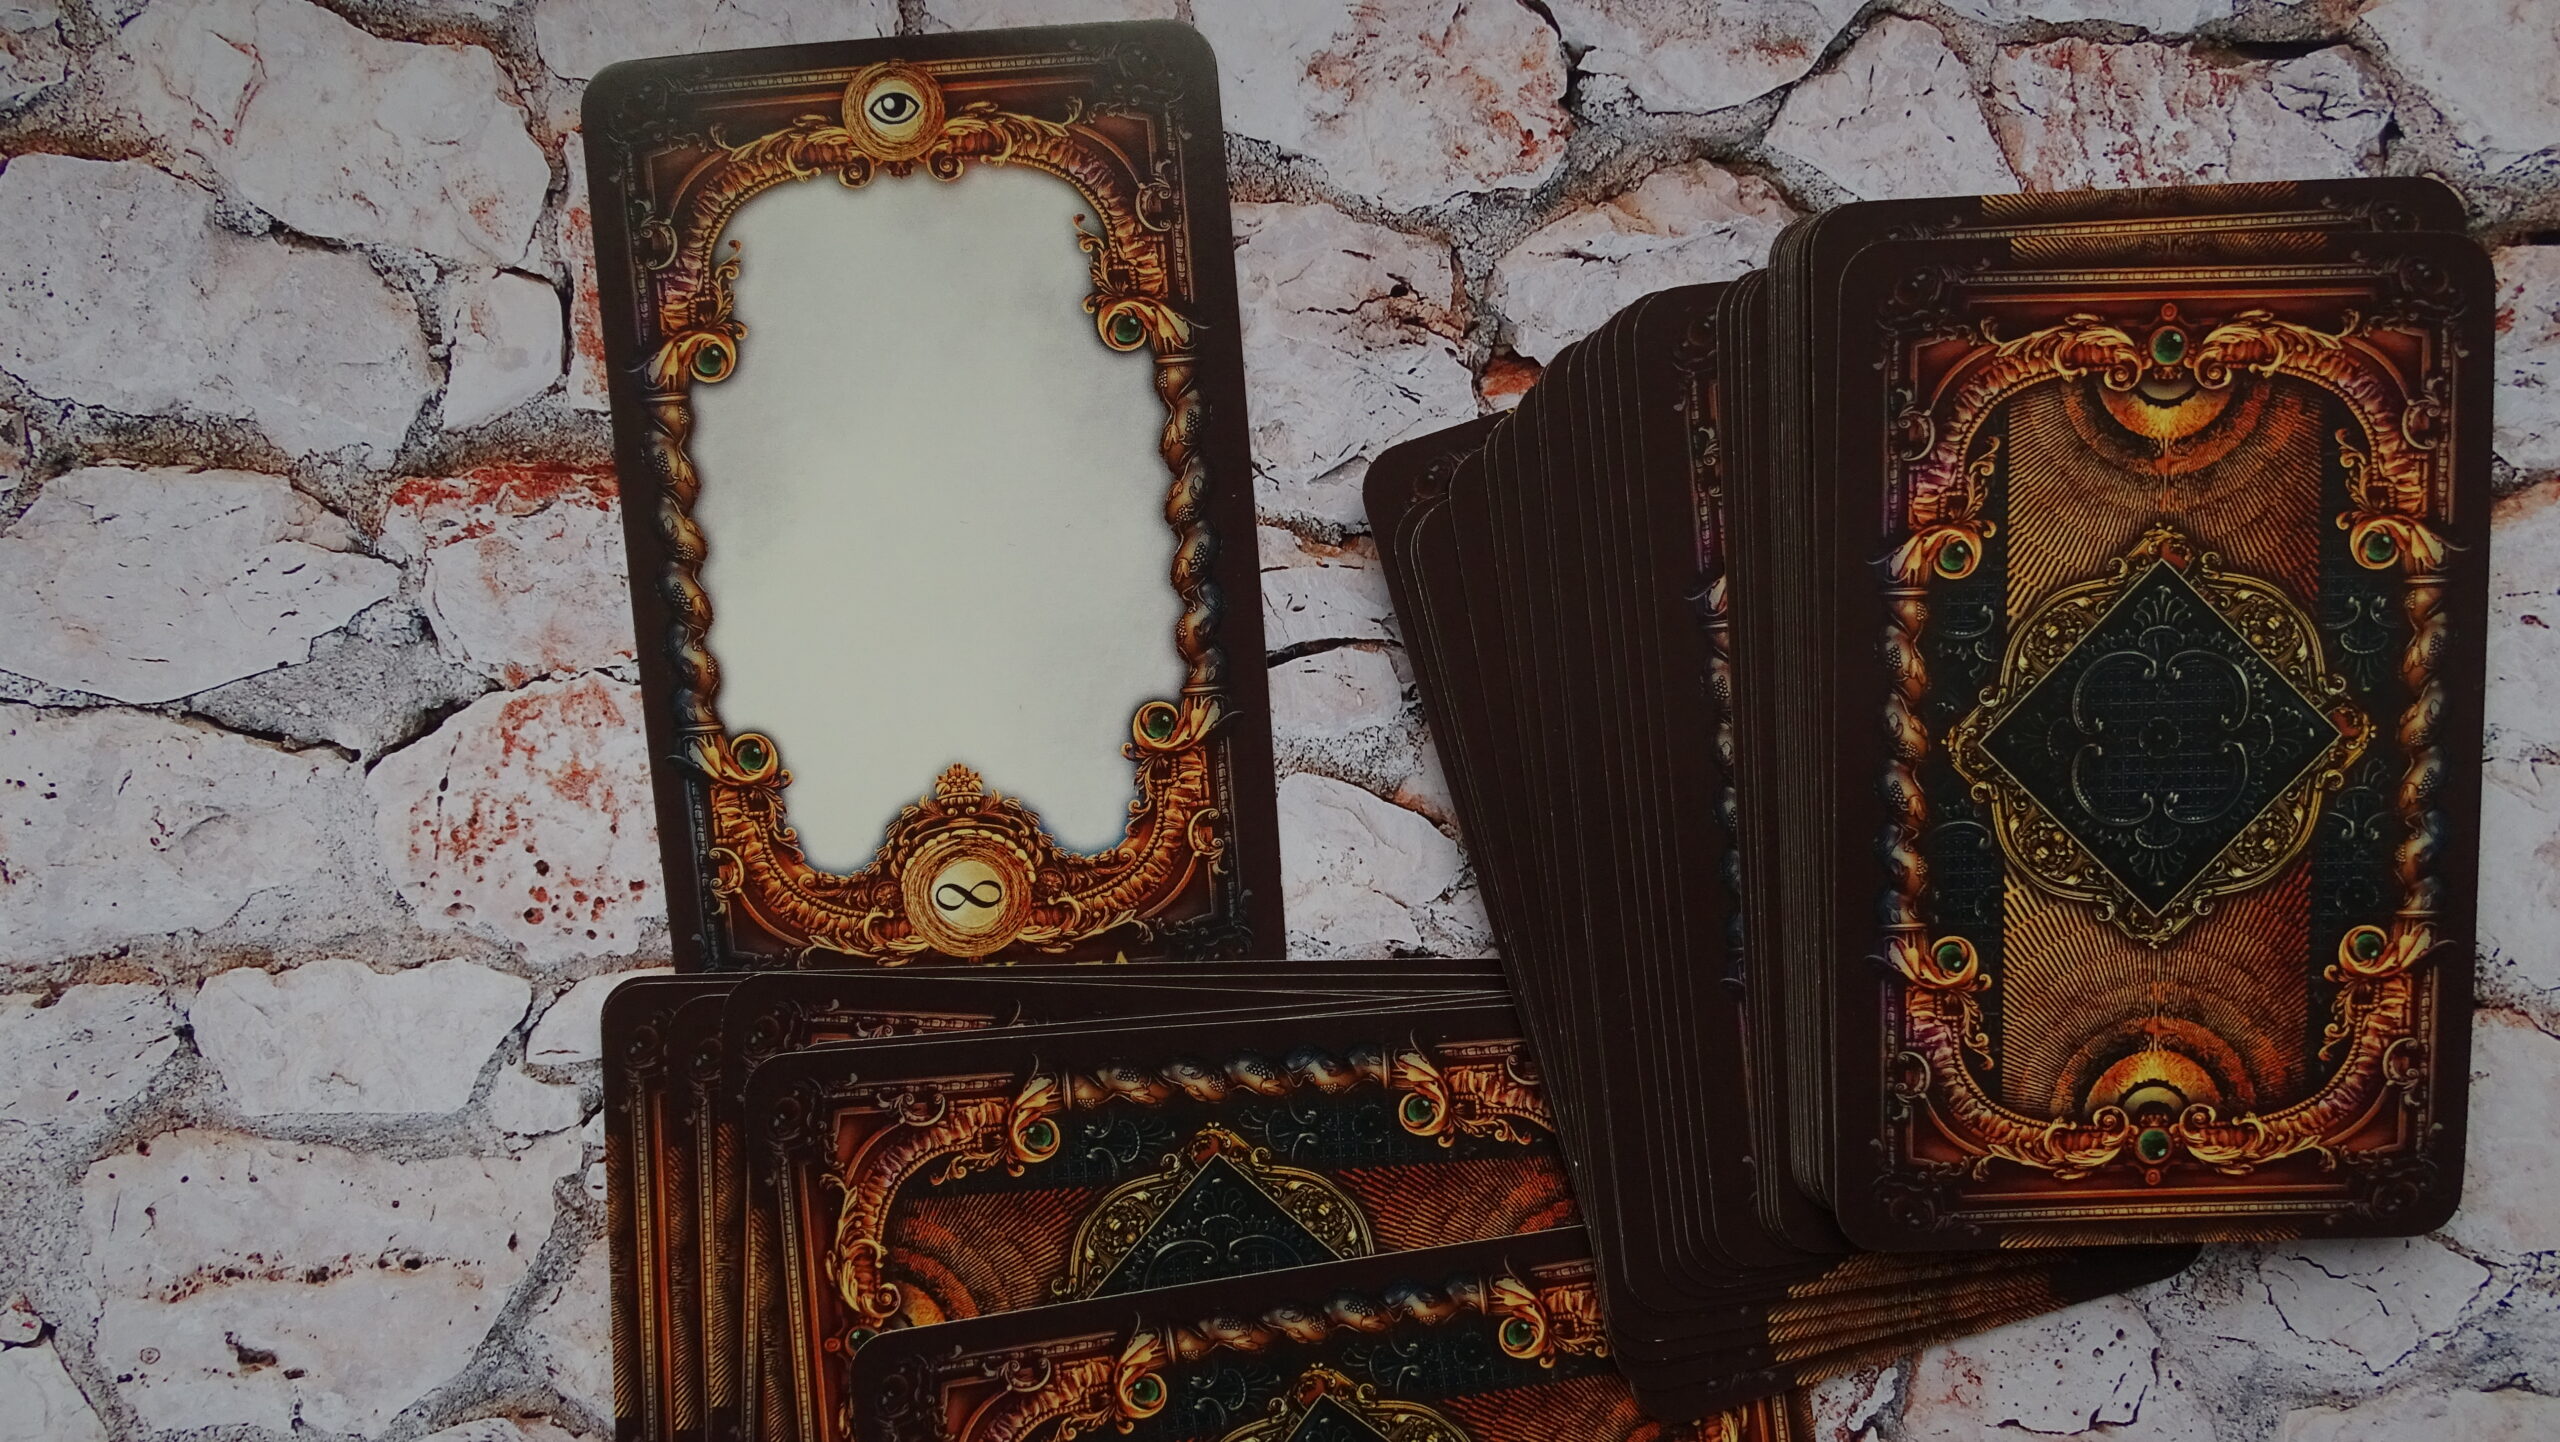 The Blank Card - Tarot